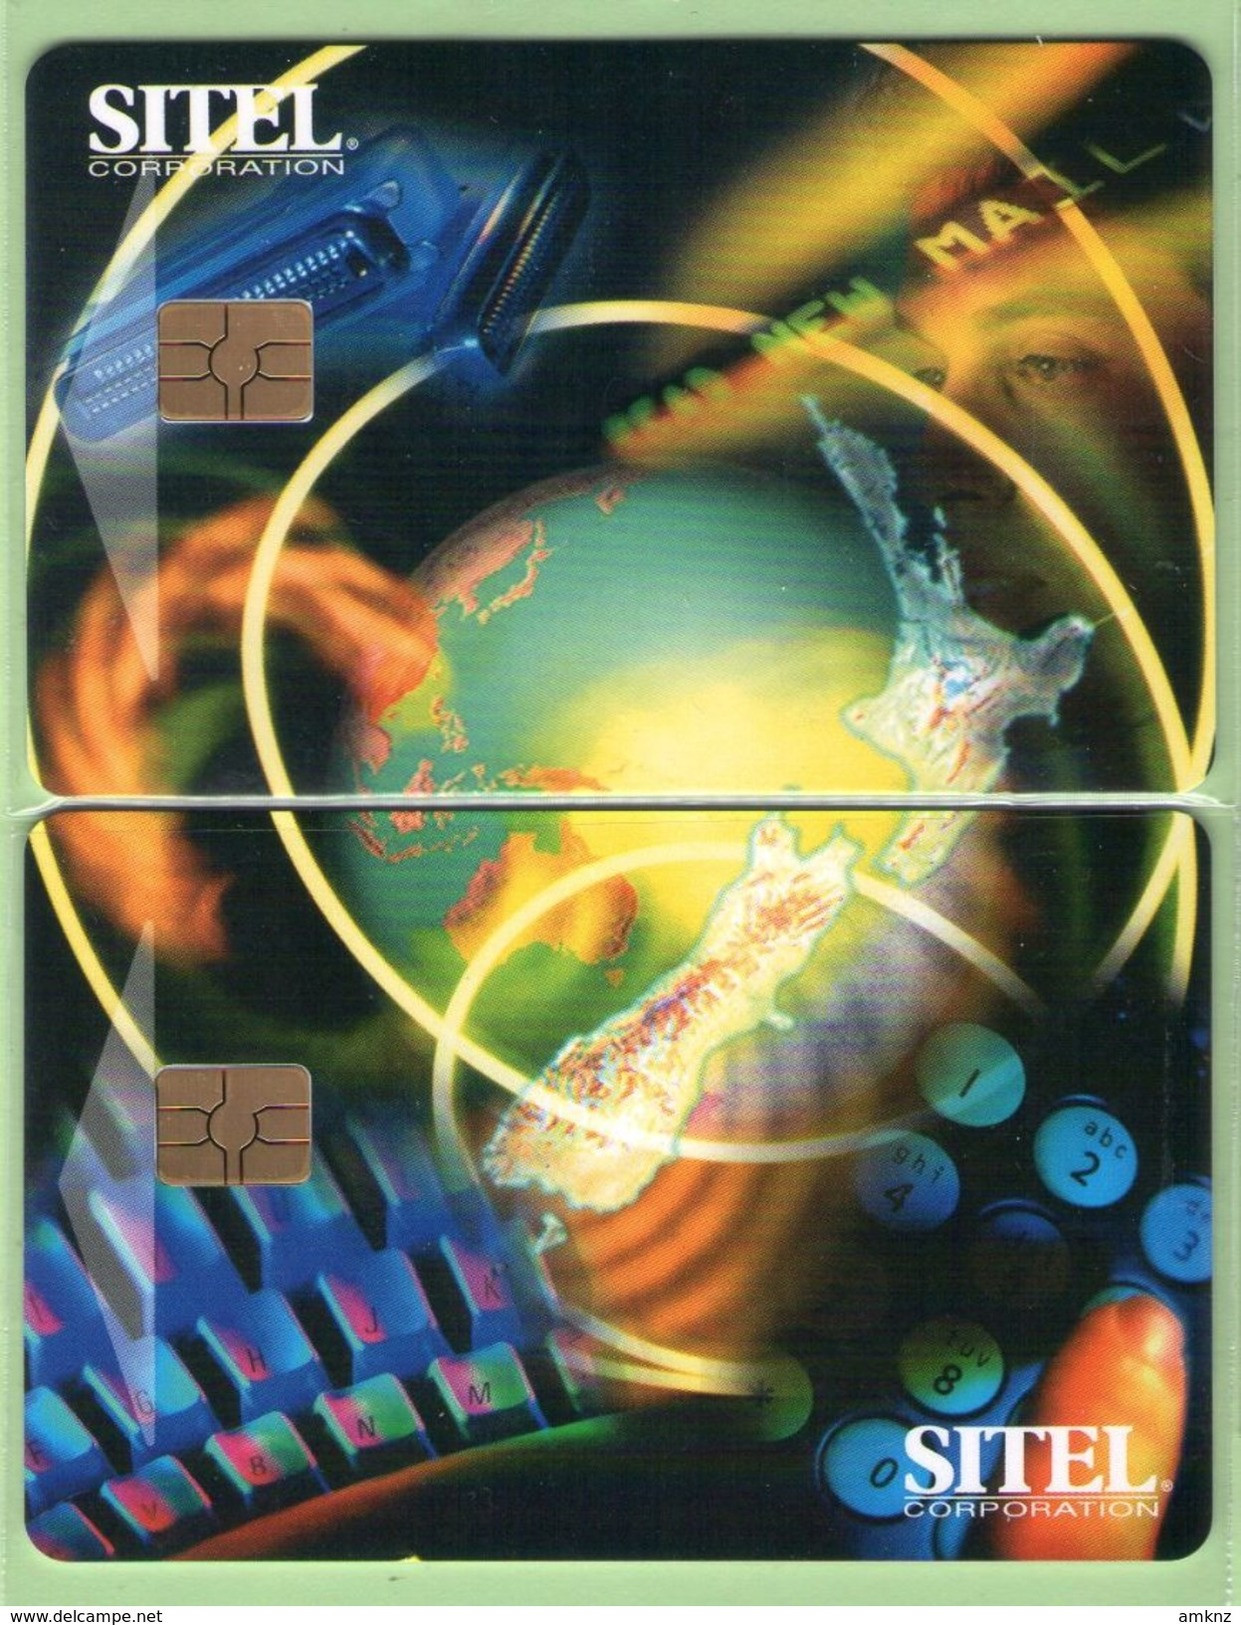 New Zealand - Chipcards - 1999 SITEL Corporation - Puzzle Set (2) - Mint - Cards 017 - New Zealand